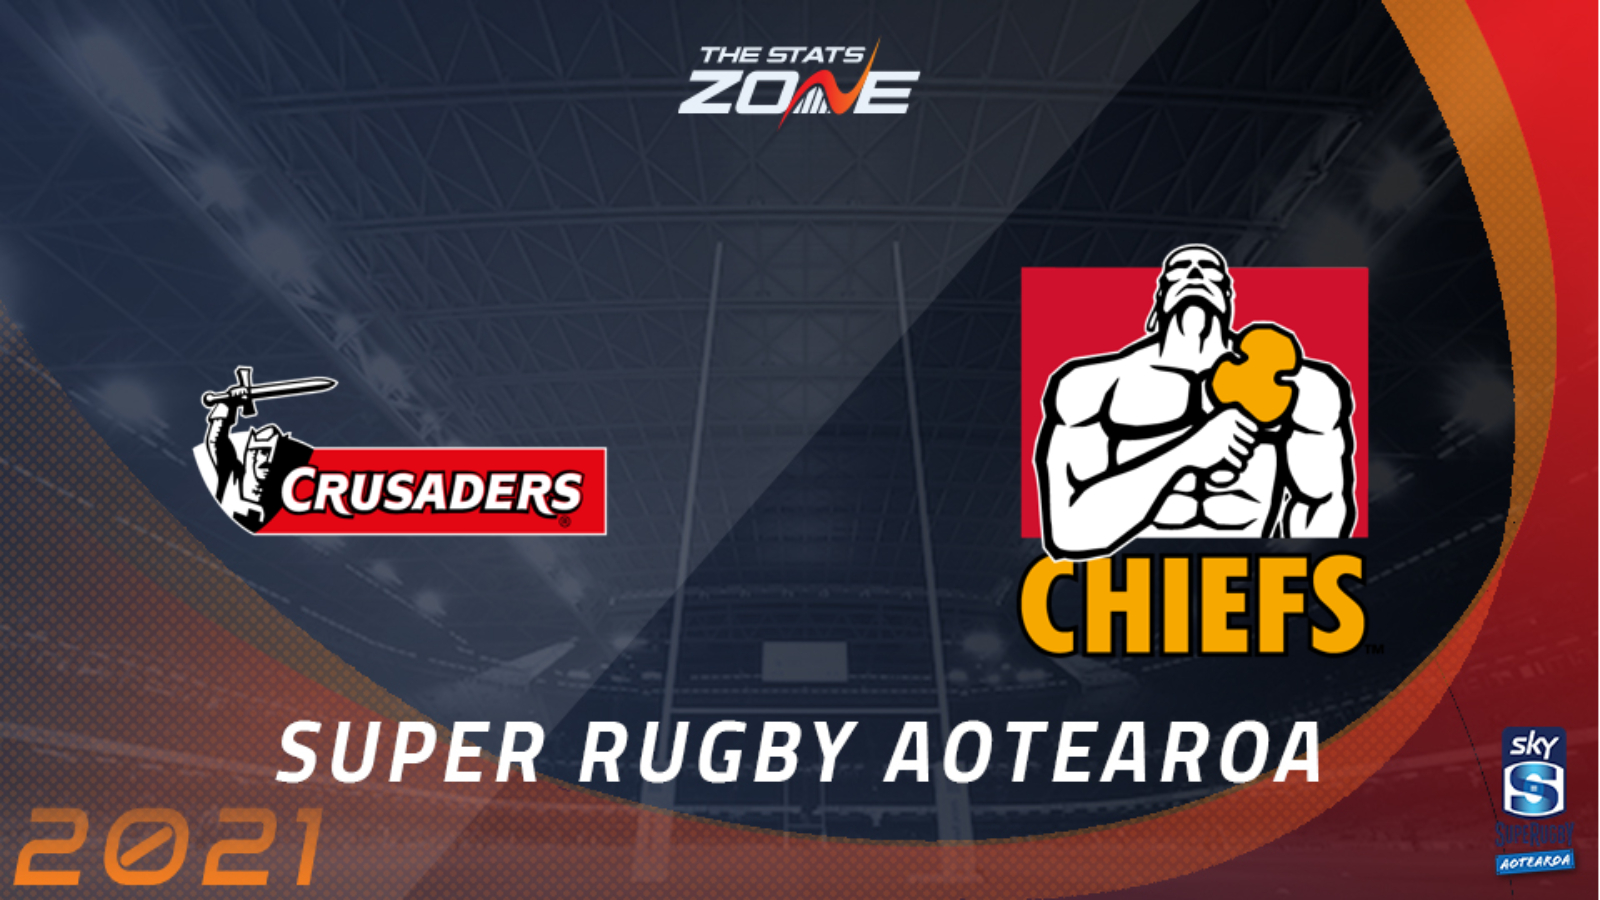 2021 Super Rugby Aotearoa